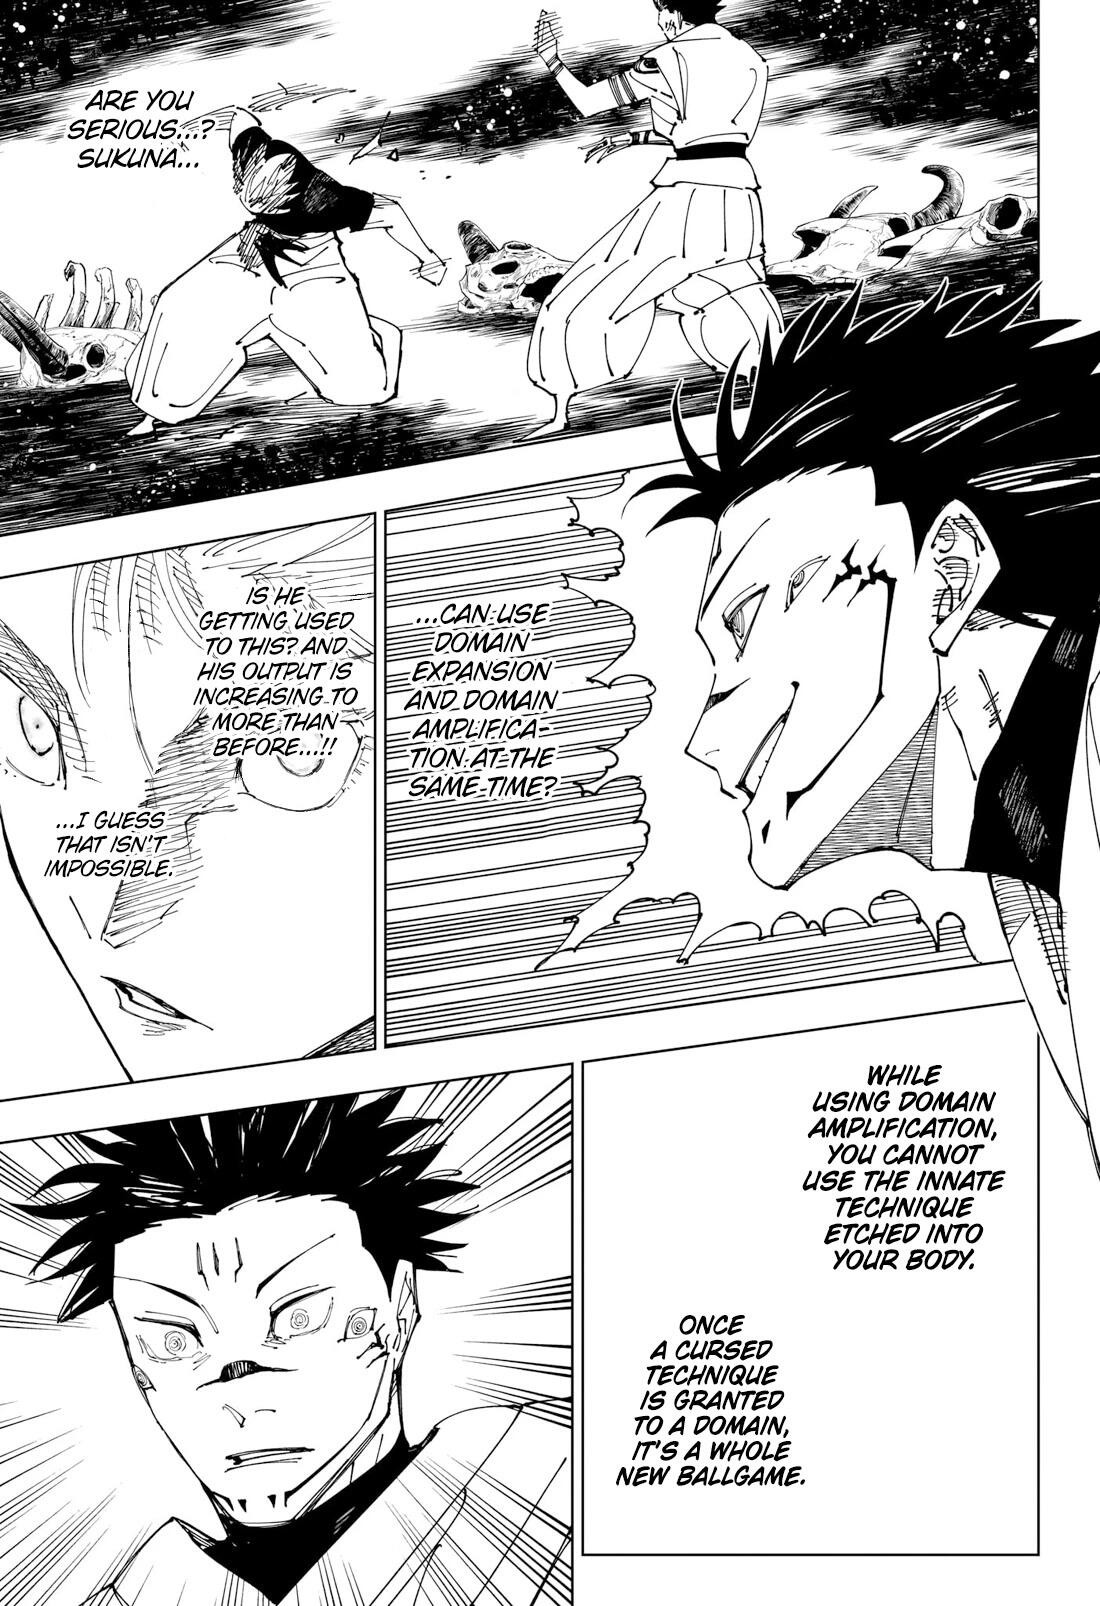 Jujutsu Kaisen Chapter 227: The Decisive Battle In The Uninhabited, Demon-Infested Shinjuku ⑤ page 10 - Mangakakalot